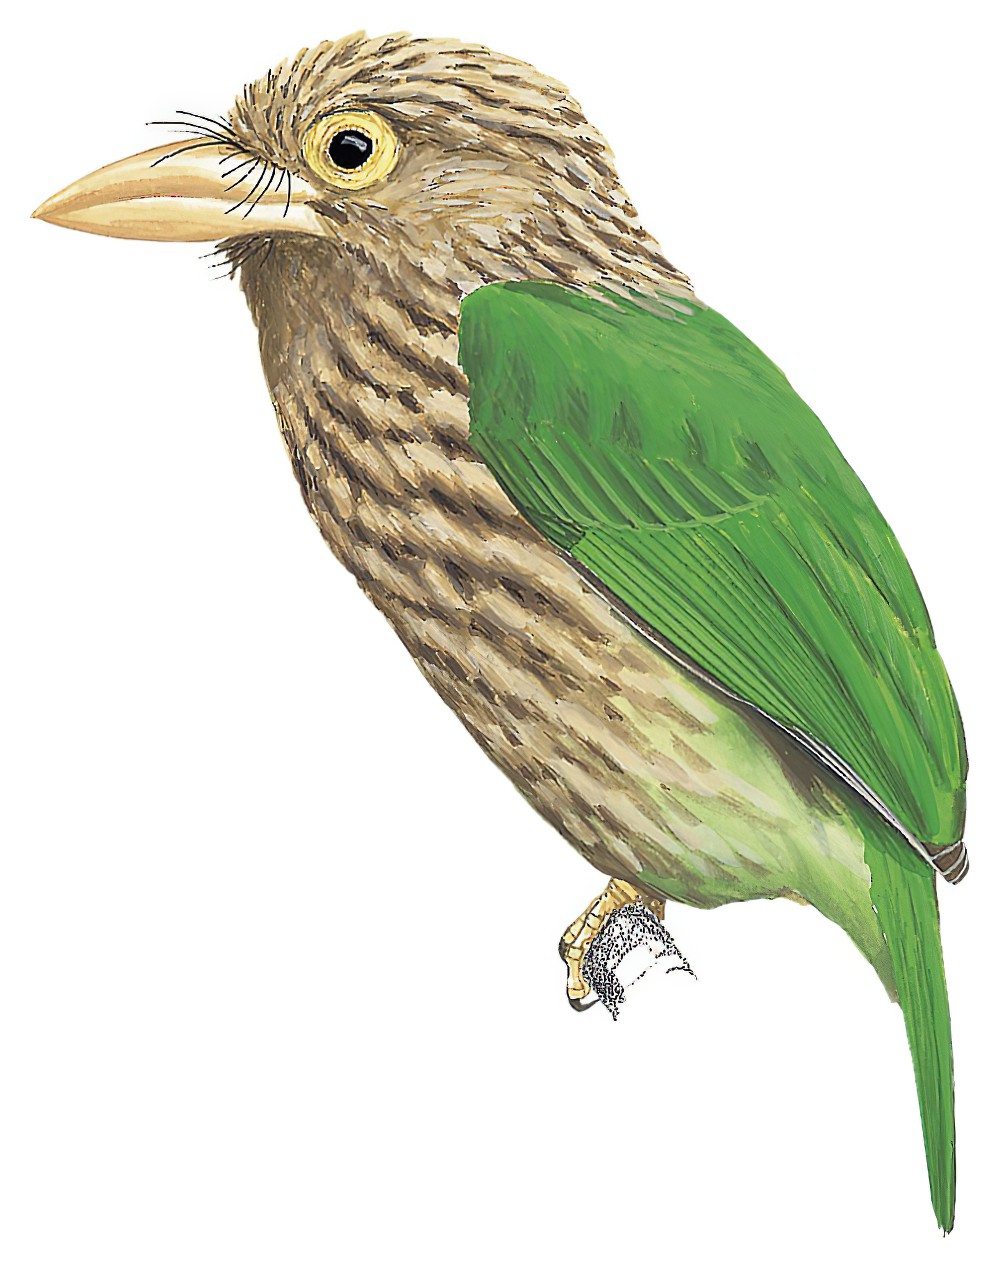 Lineated Barbet / Psilopogon lineatus